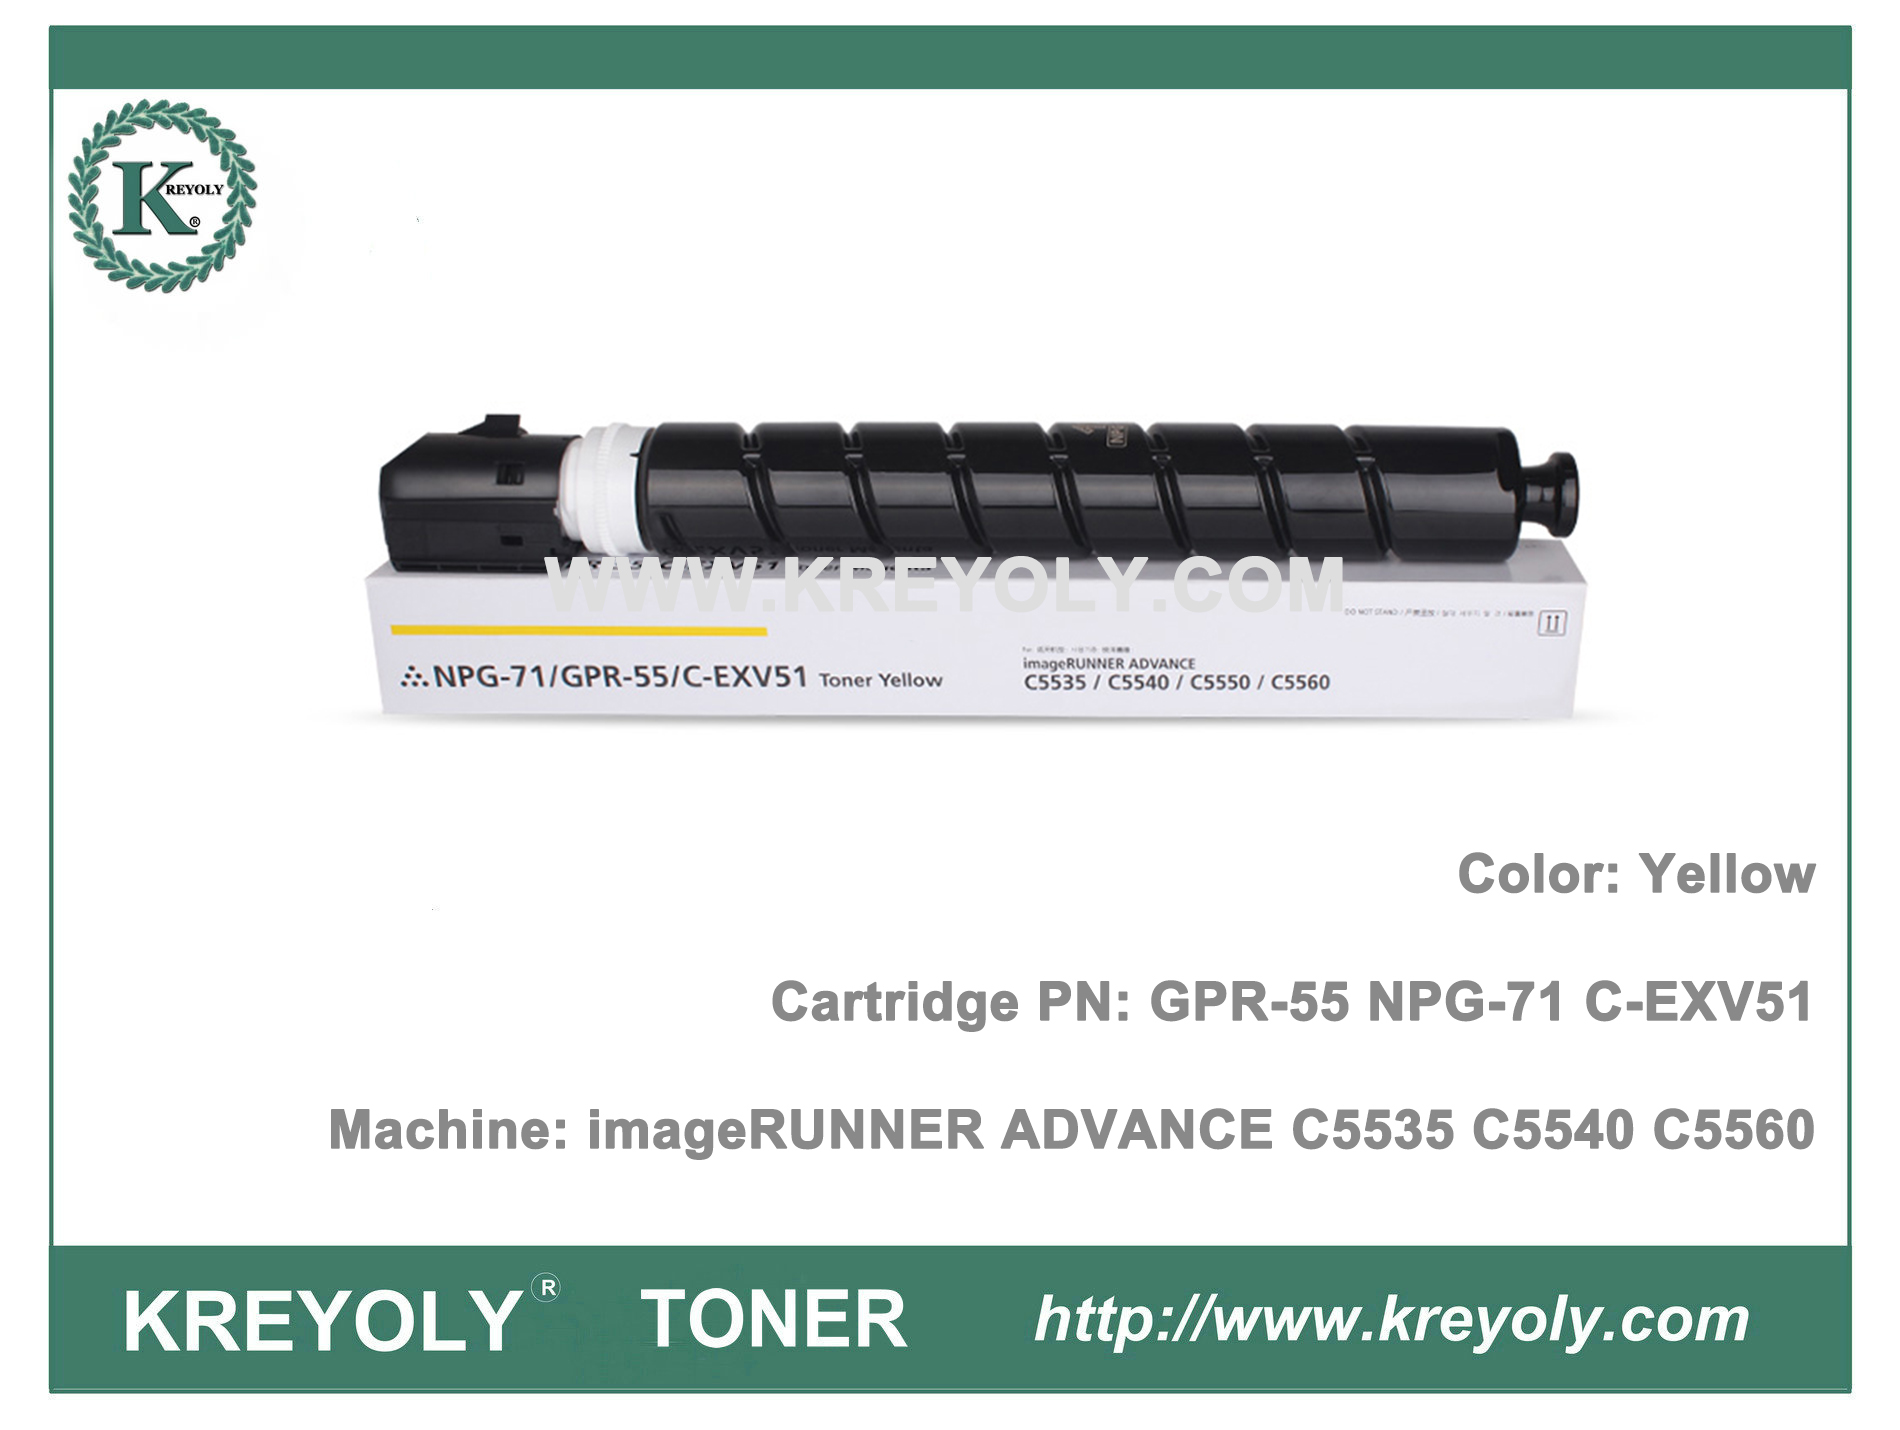 NPG71 GPR55 C-EXV51 Cartucho de tóner para imageRunner ADVANCE C5560 C5550 C5540 C5535